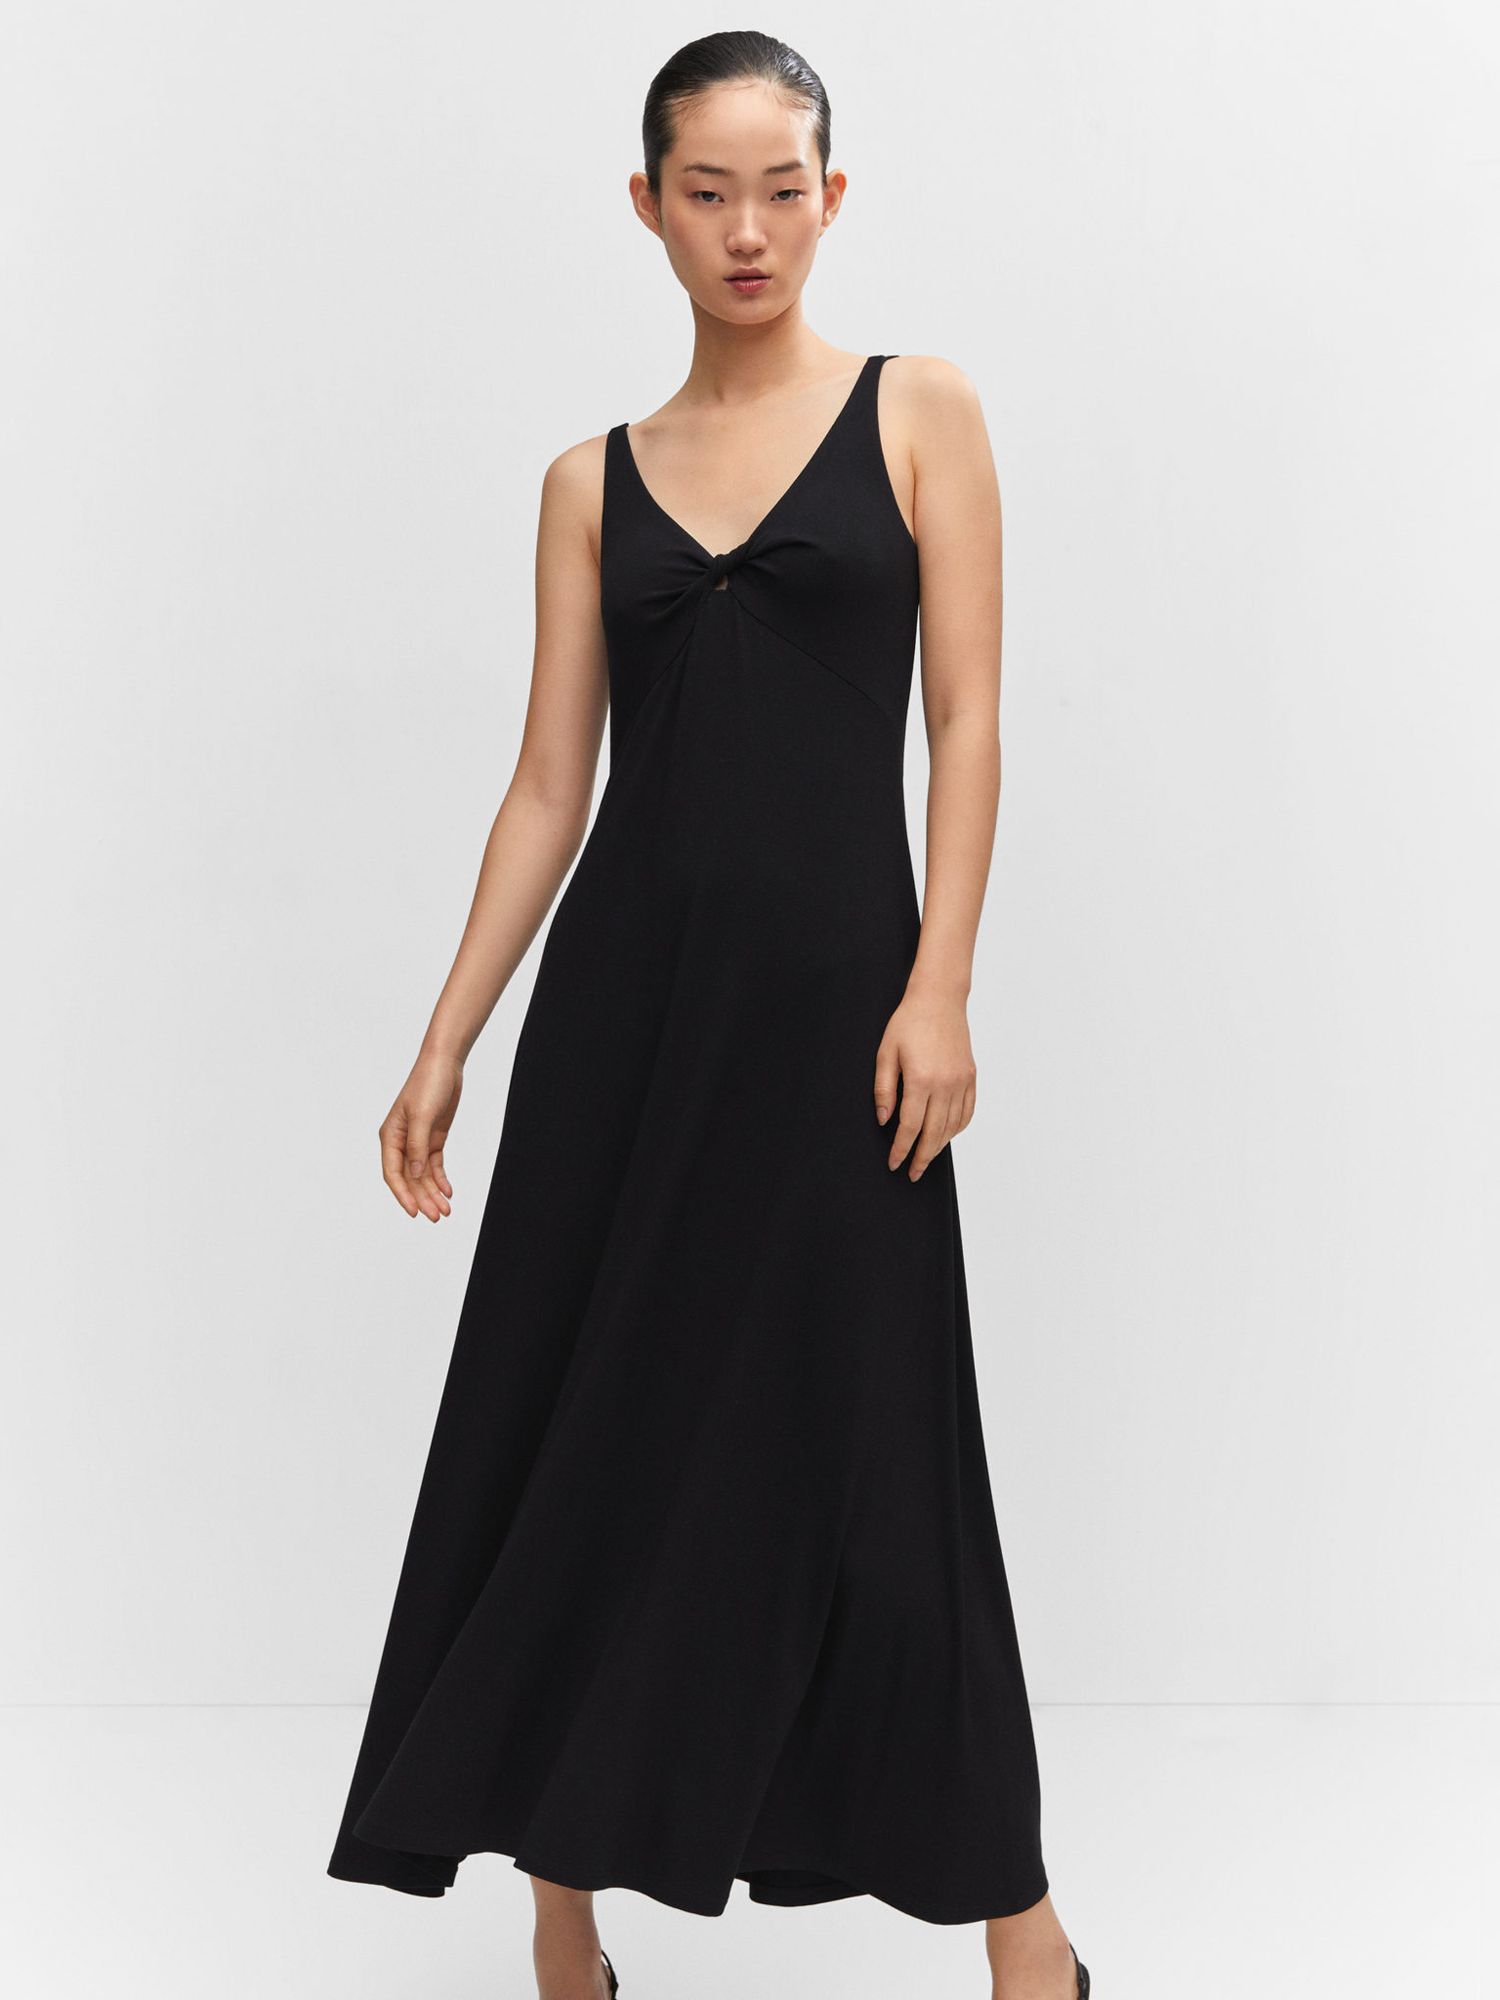 Mango Cali Knitted Flared Dress, Black at John Lewis & Partners